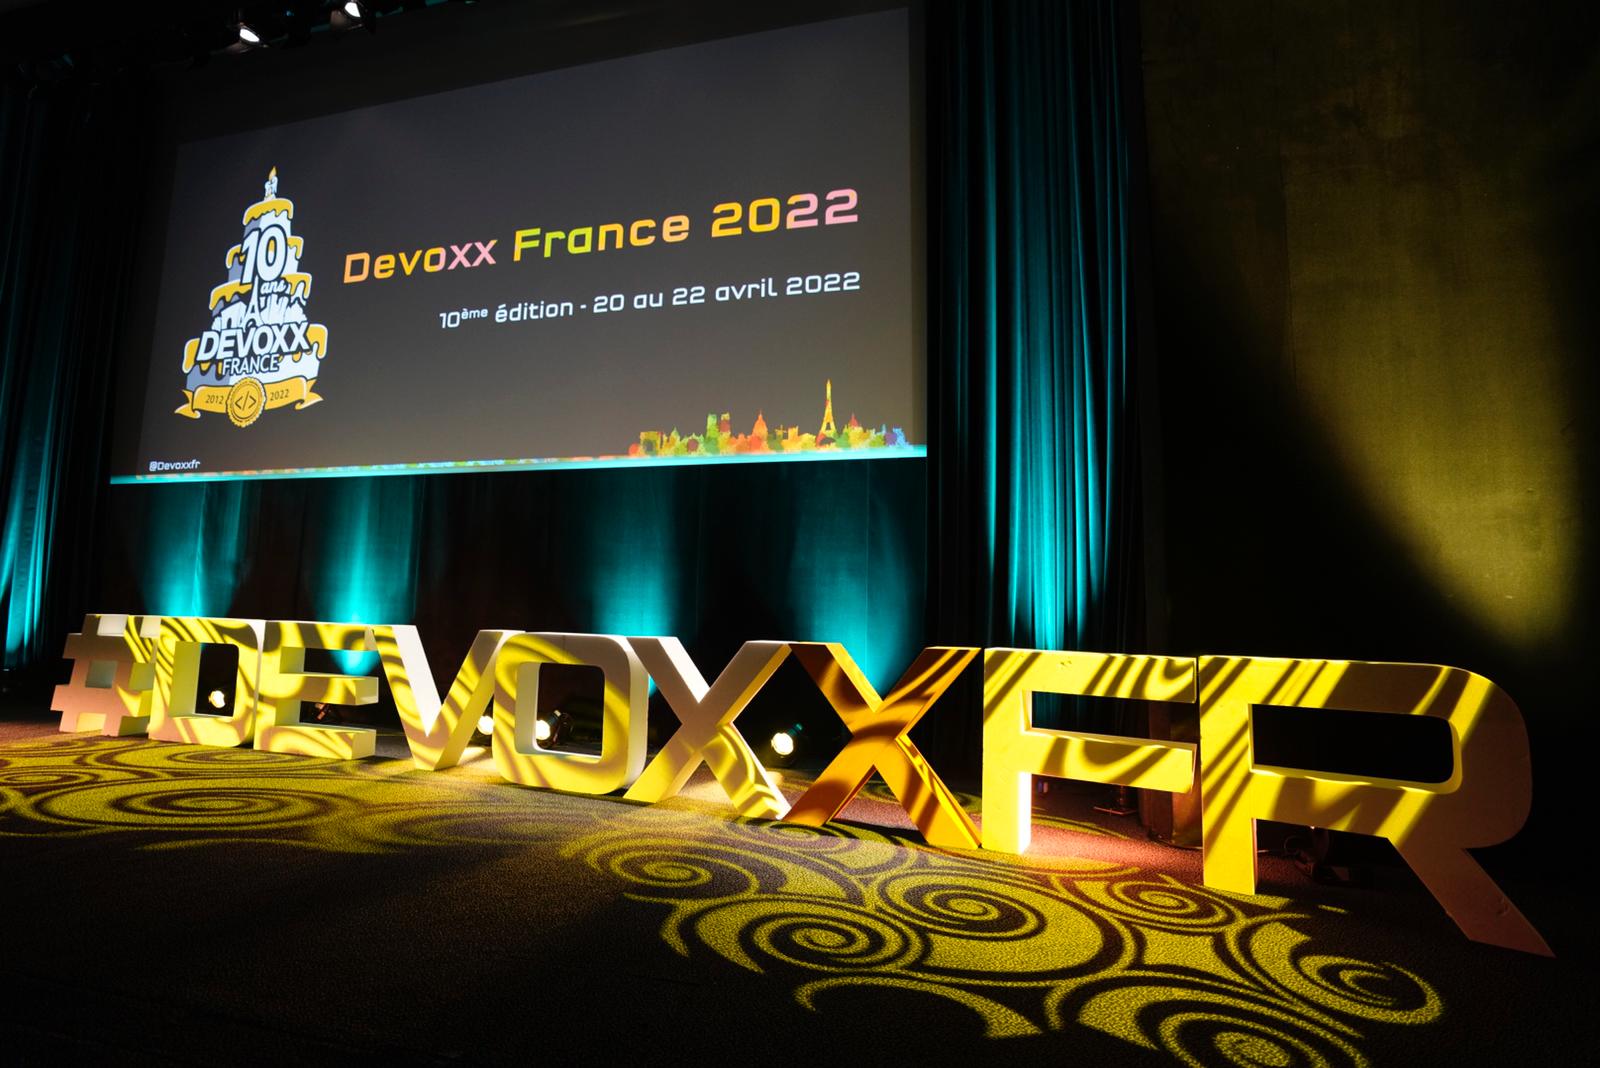 Devoxx France 2022